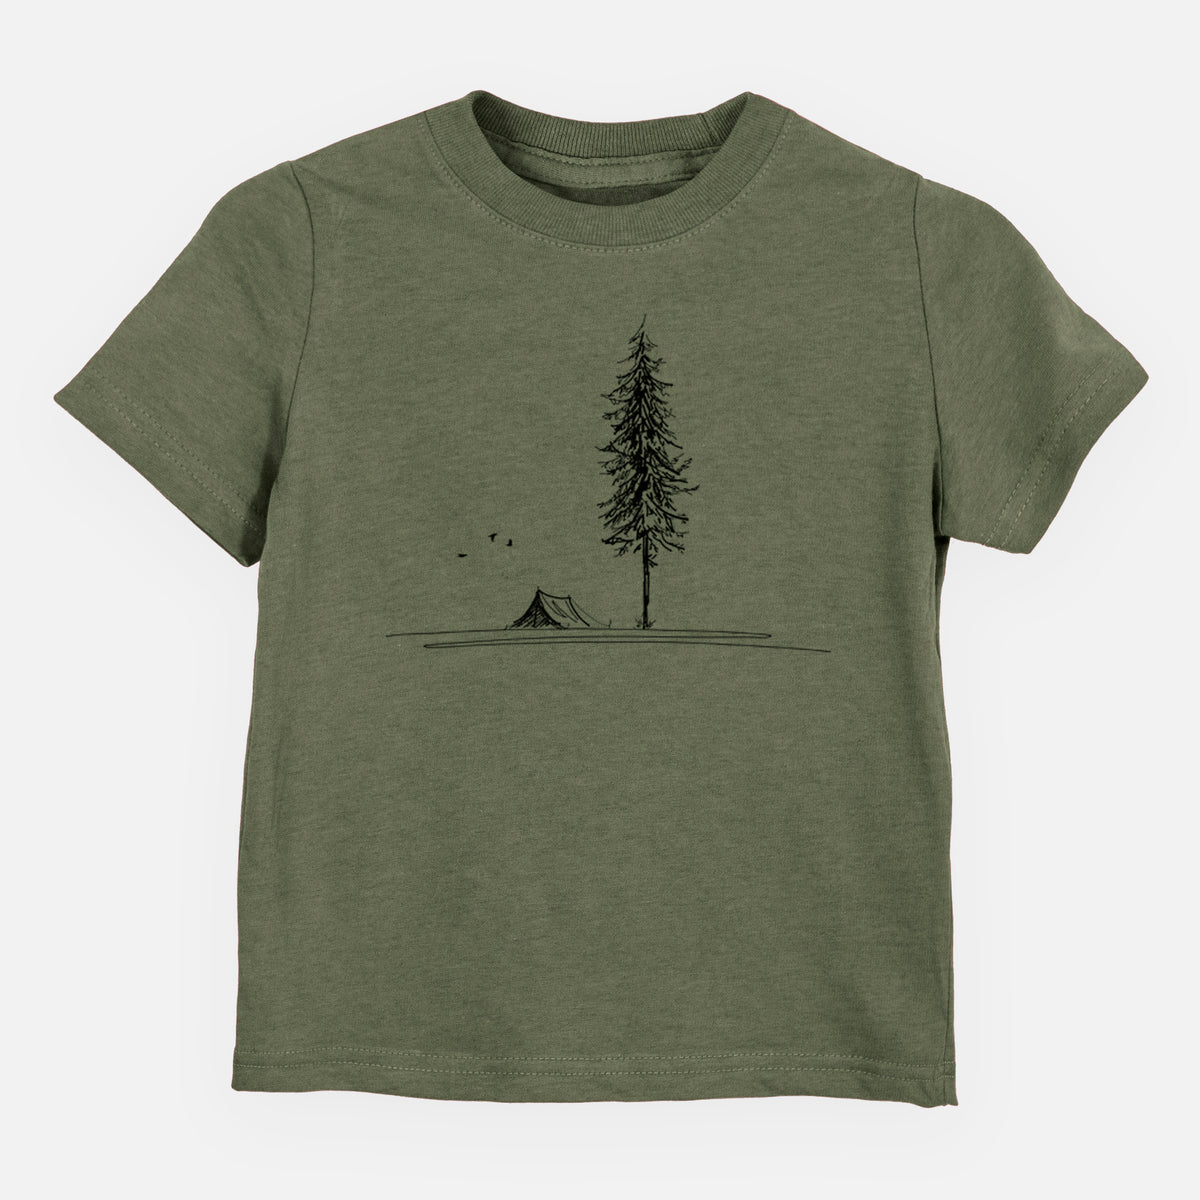 Pine Camp Vista - Kids Shirt